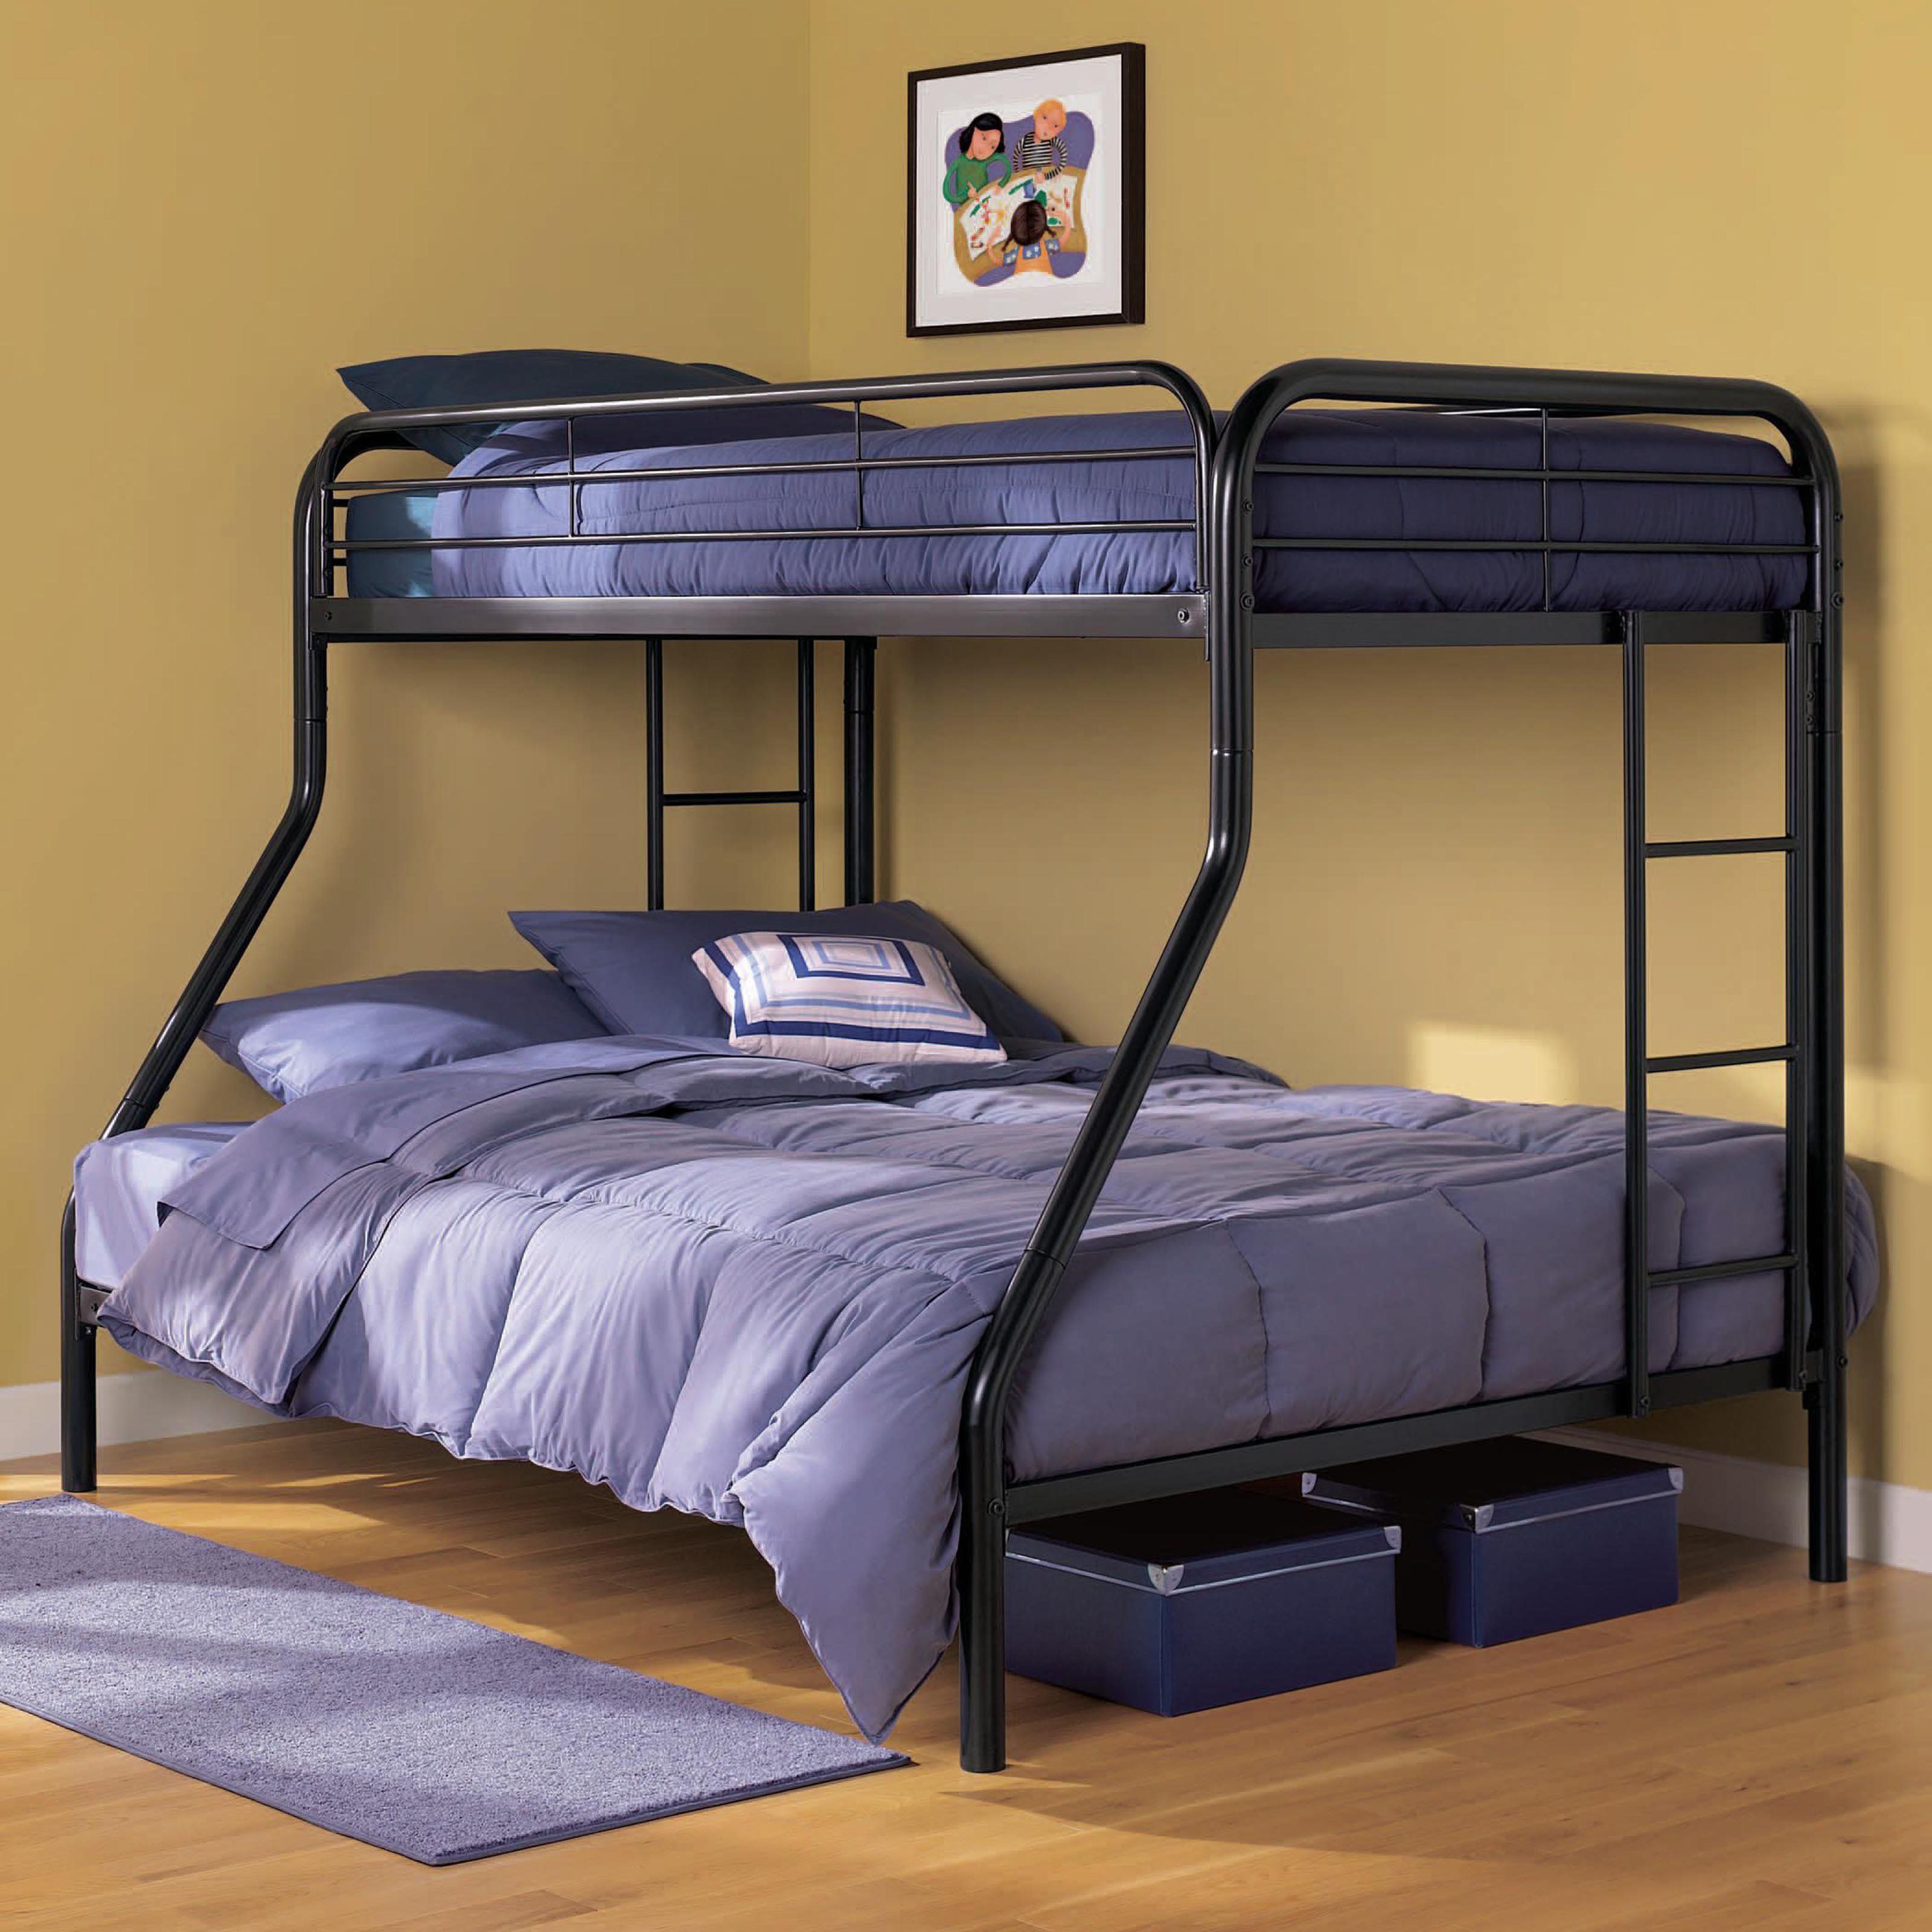 Кровати двух метров. Двухъярусная кровать Gunmetal Full/Full Bunk Bed. Двухъярусная кровать Twin/Full Bunkbed (Metal). Кровать металлическая двухъярусная 1964x930x1750. Двухъярусная кровать Толедо-1.